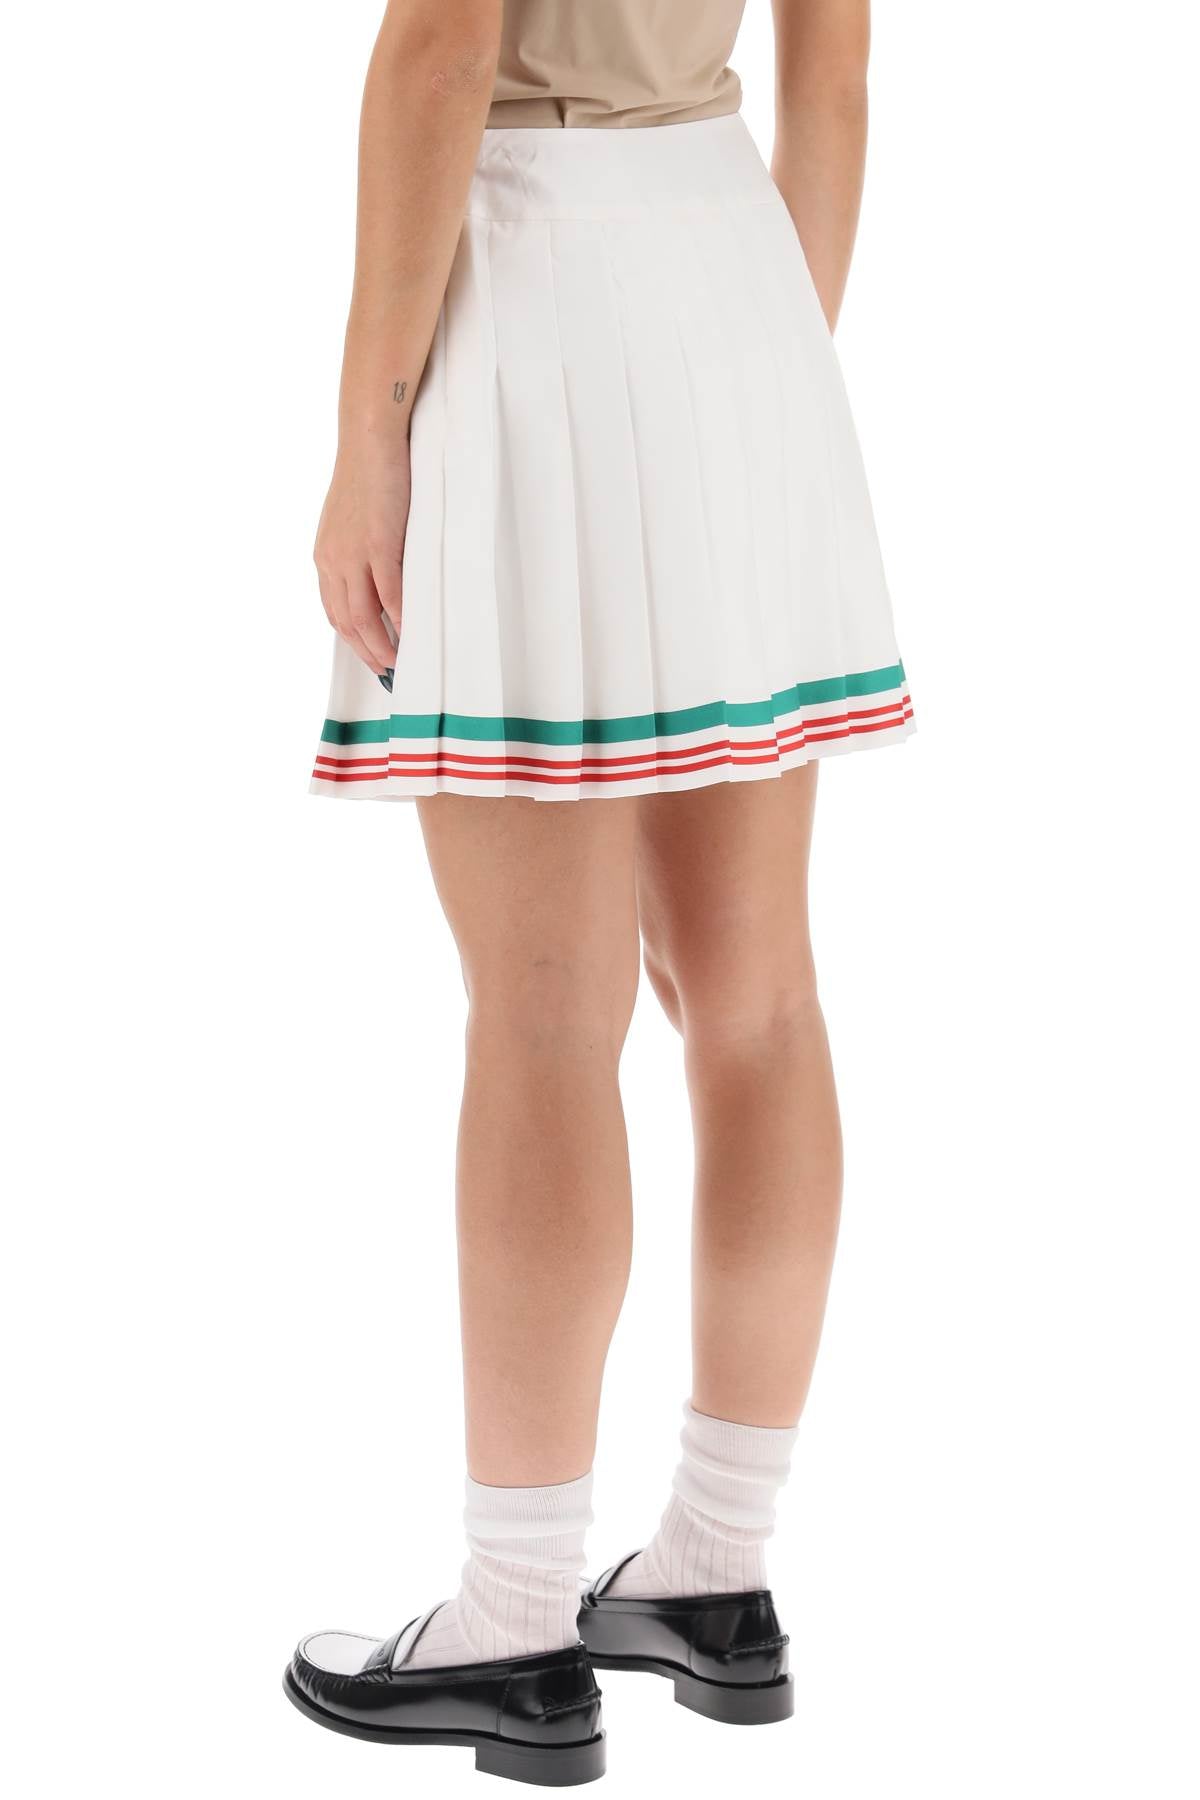 CASABLANCA Chic and Stylish Tennis Mini Skirt for Women